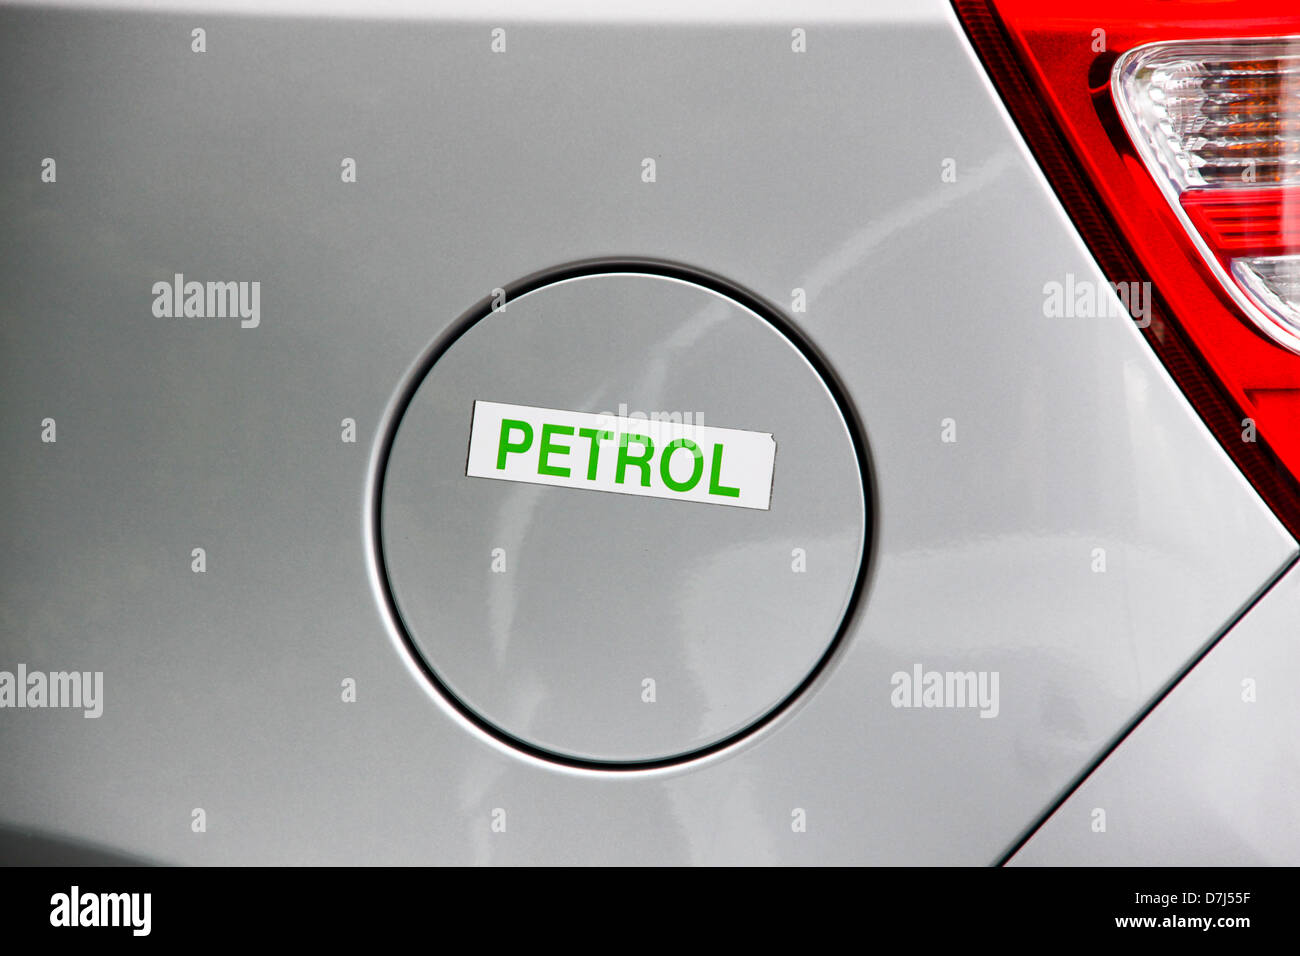 Petrol reminder label on car tank flap Stock Photo